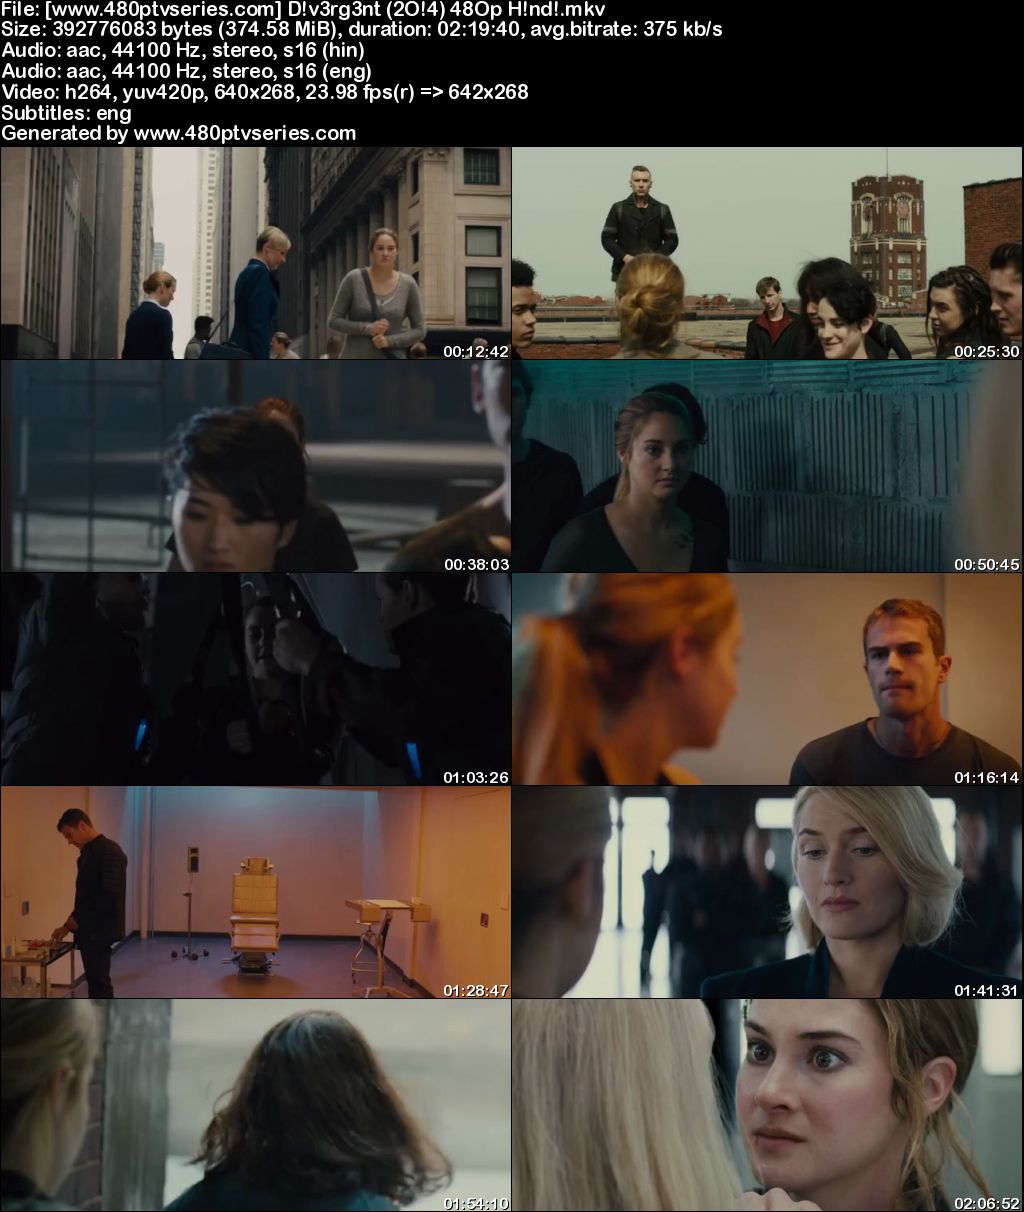 Divergent (2014) 350MB Full Hindi Dual Audio Movie Download 480p Bluray Free Watch Online Full Movie Download Worldfree4u 9xmovies